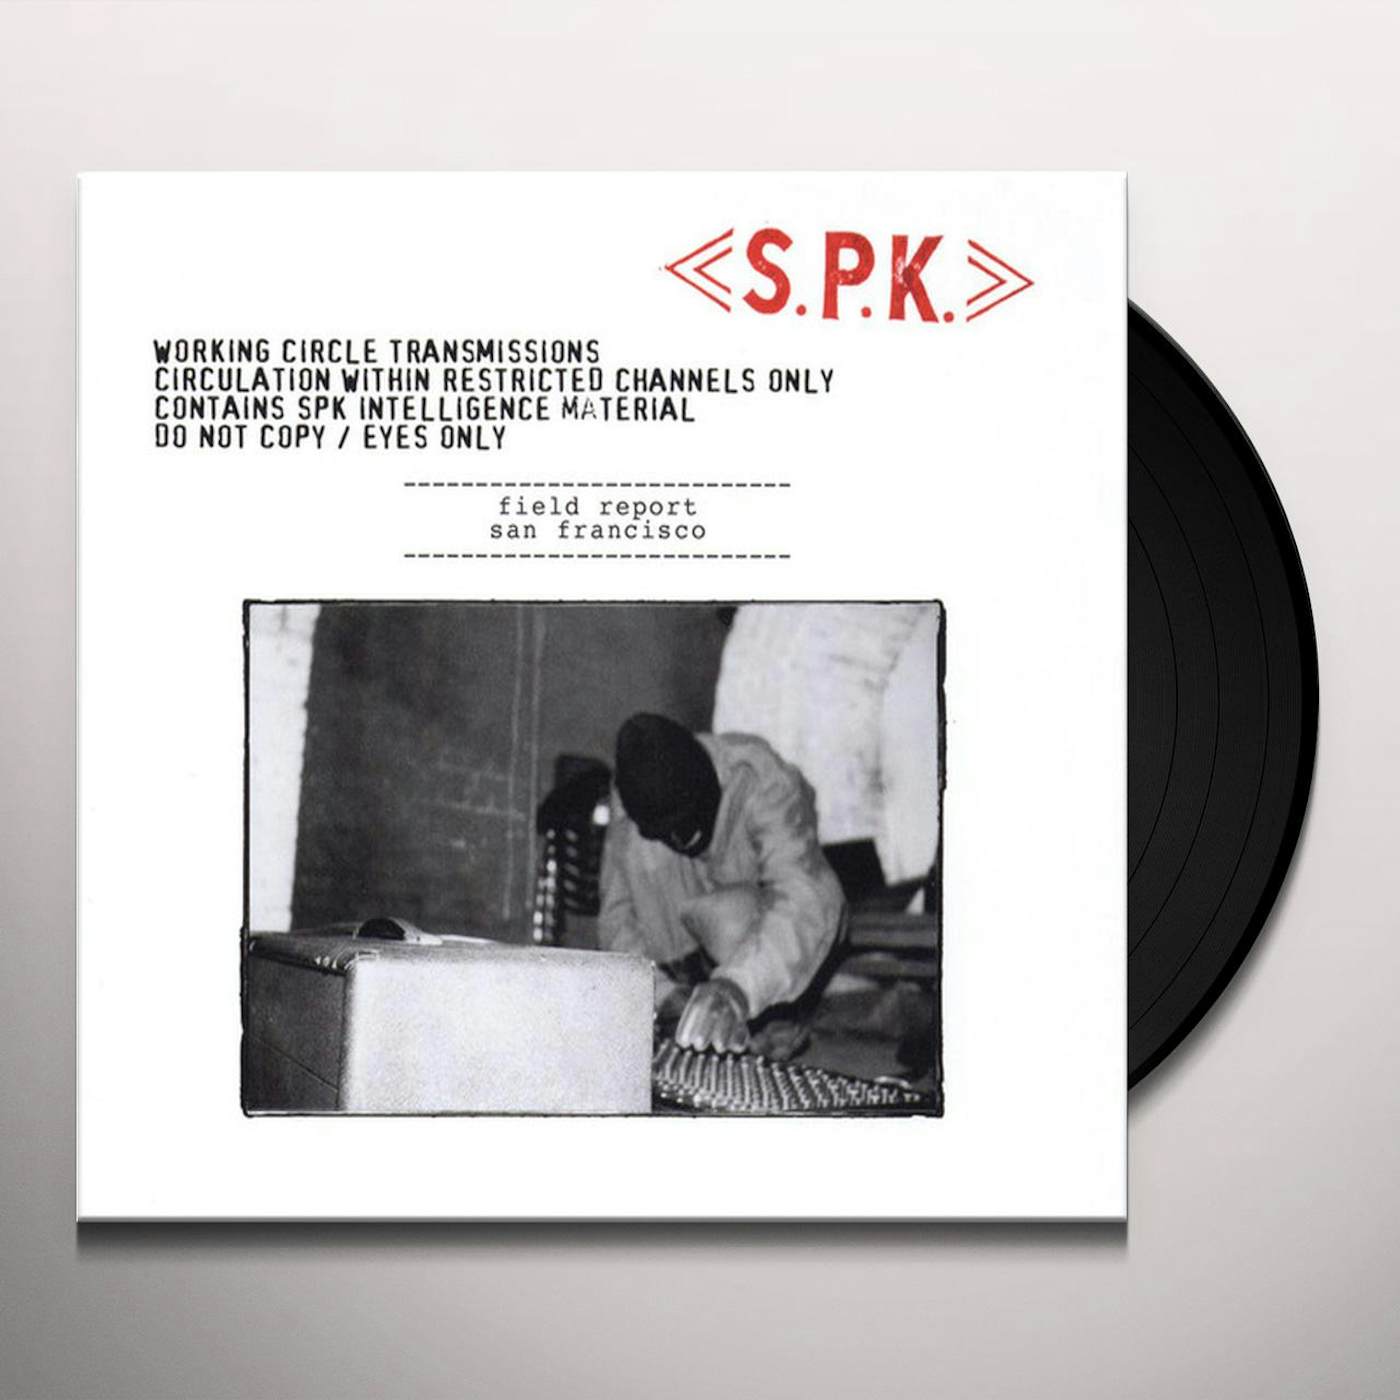 S.p.k. FIELD REPORT SAN FRANCISCO Vinyl Record